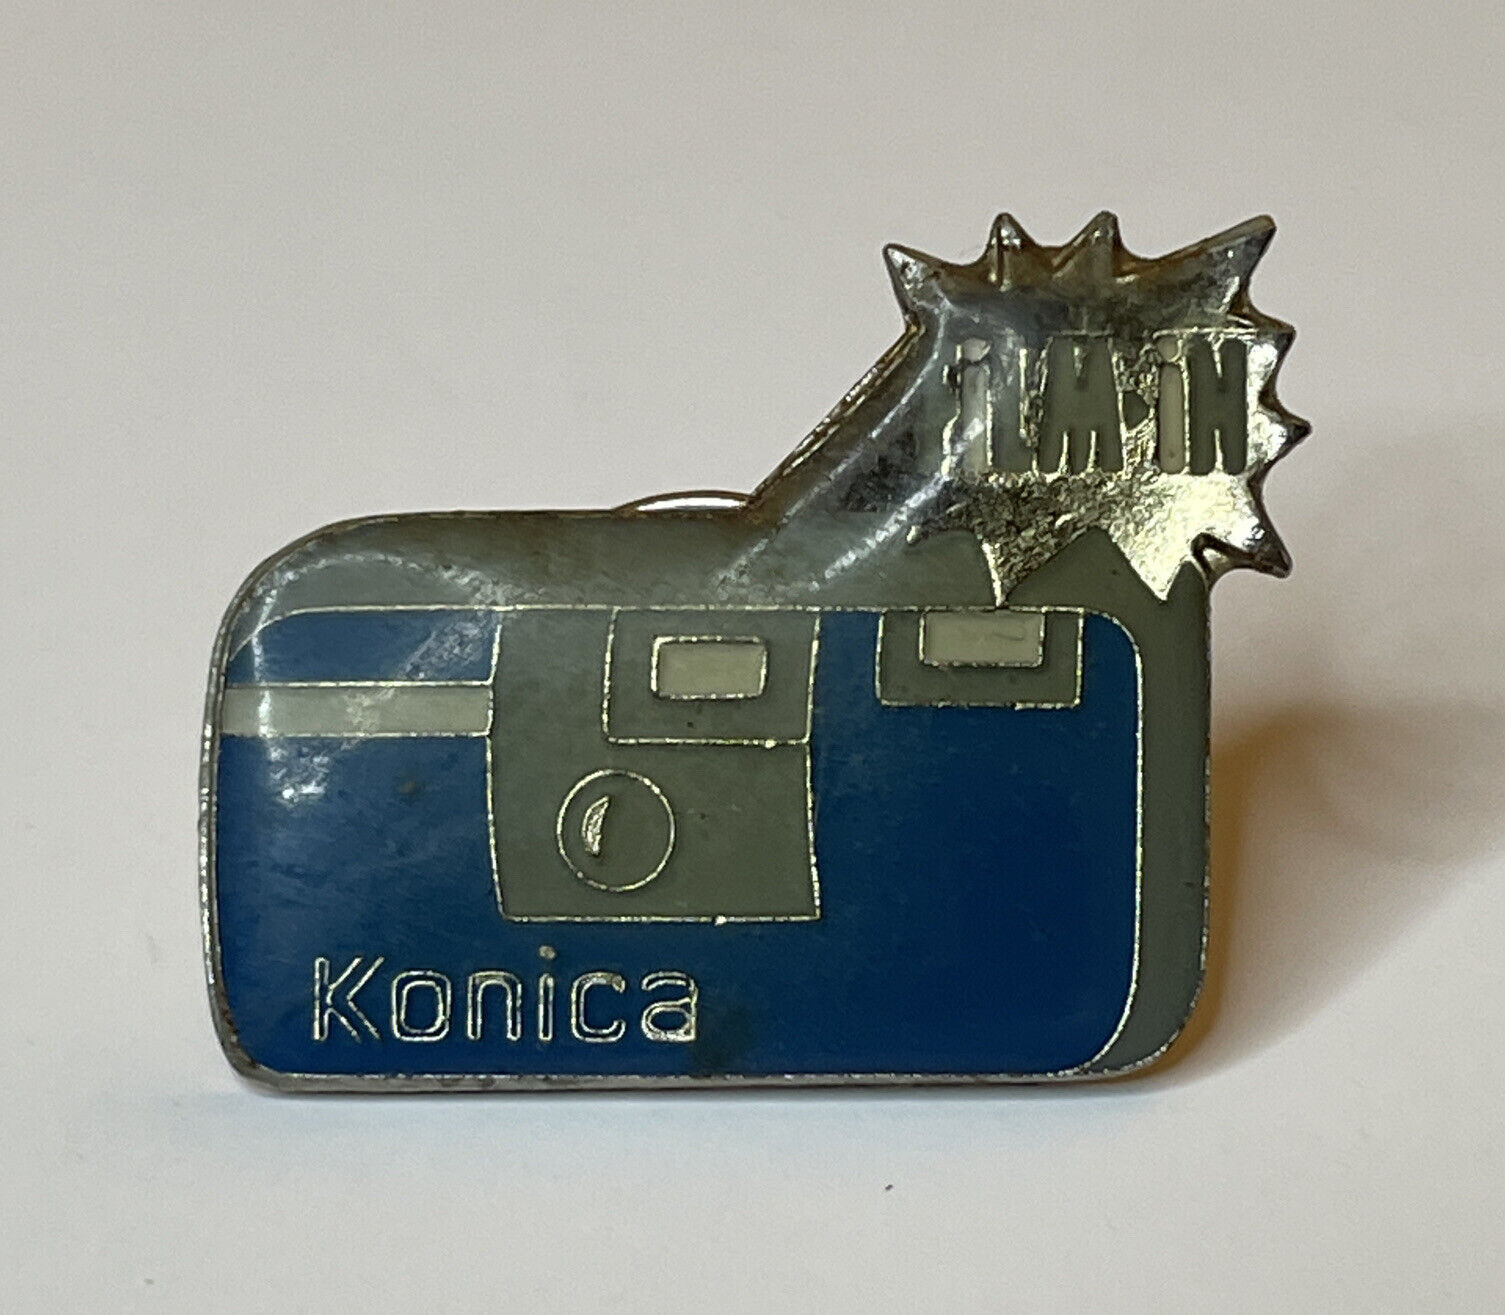 Konica Camera Brand Pin Badge Vintage - Film In Flair Photo Badge